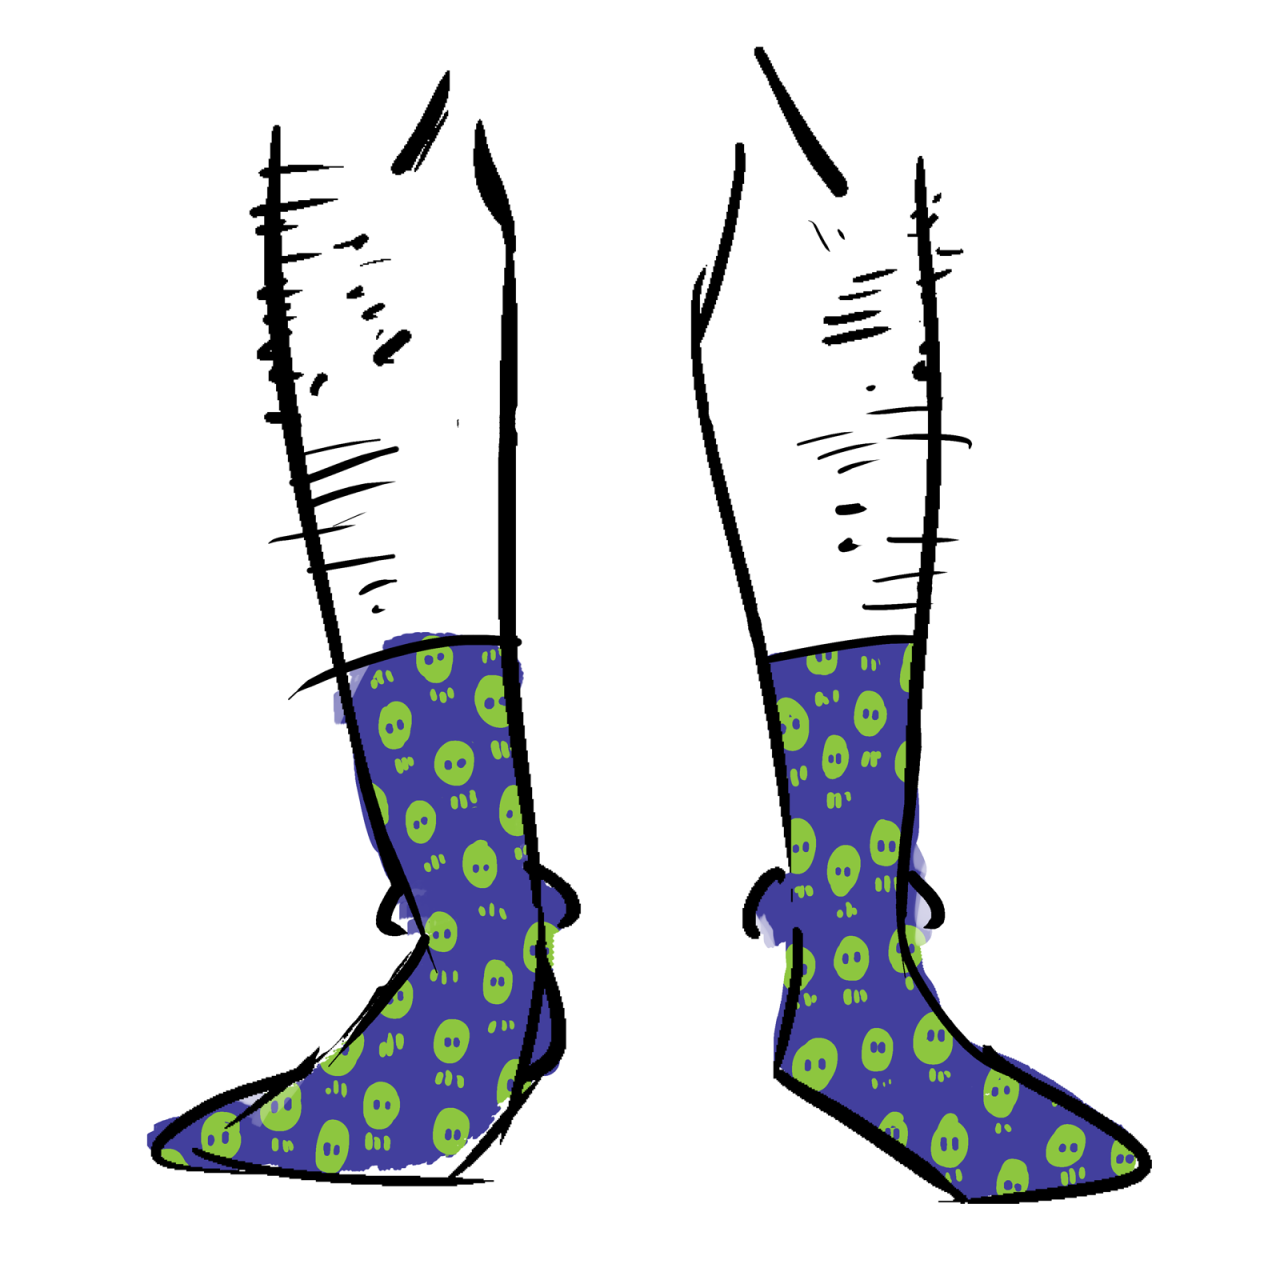 Blue socks with green skulls as a pattern